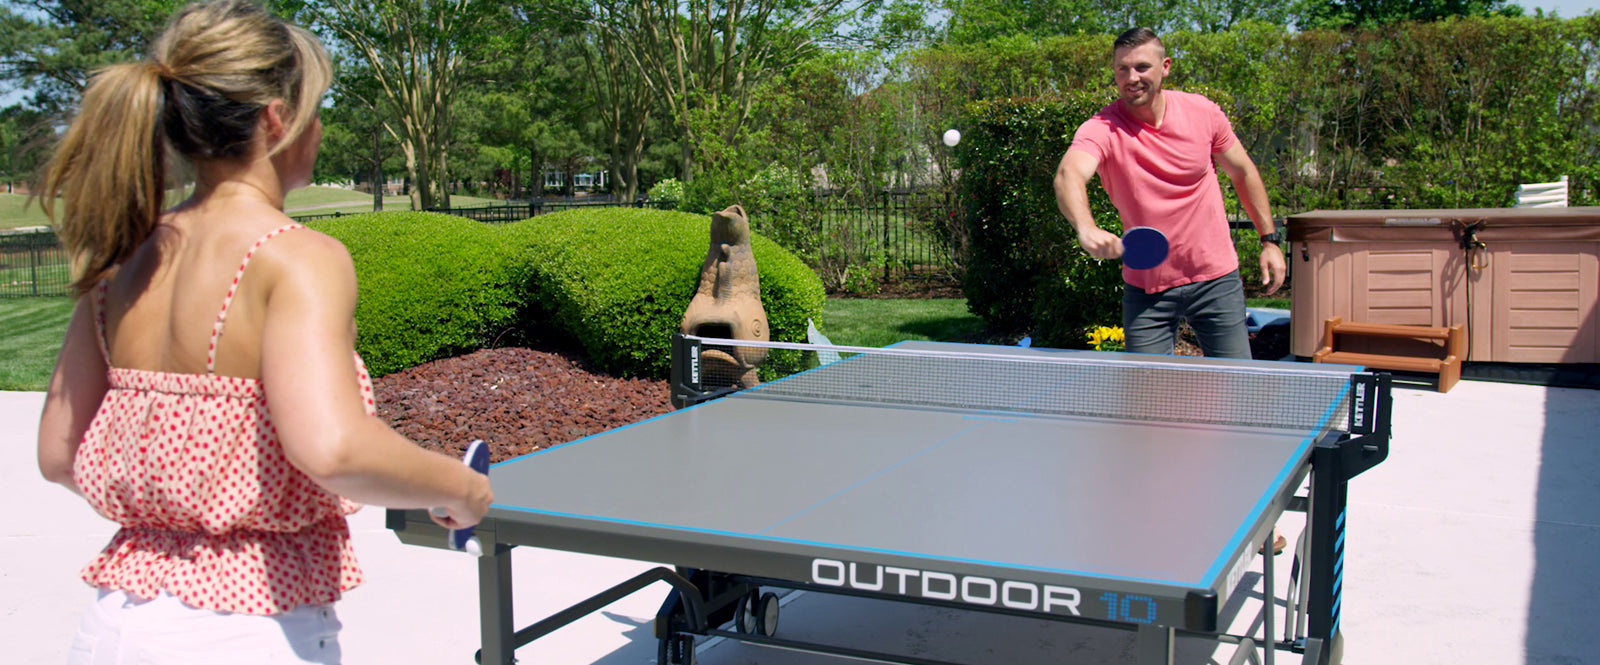 Kettler Brand Outdoor Table Tennis Table